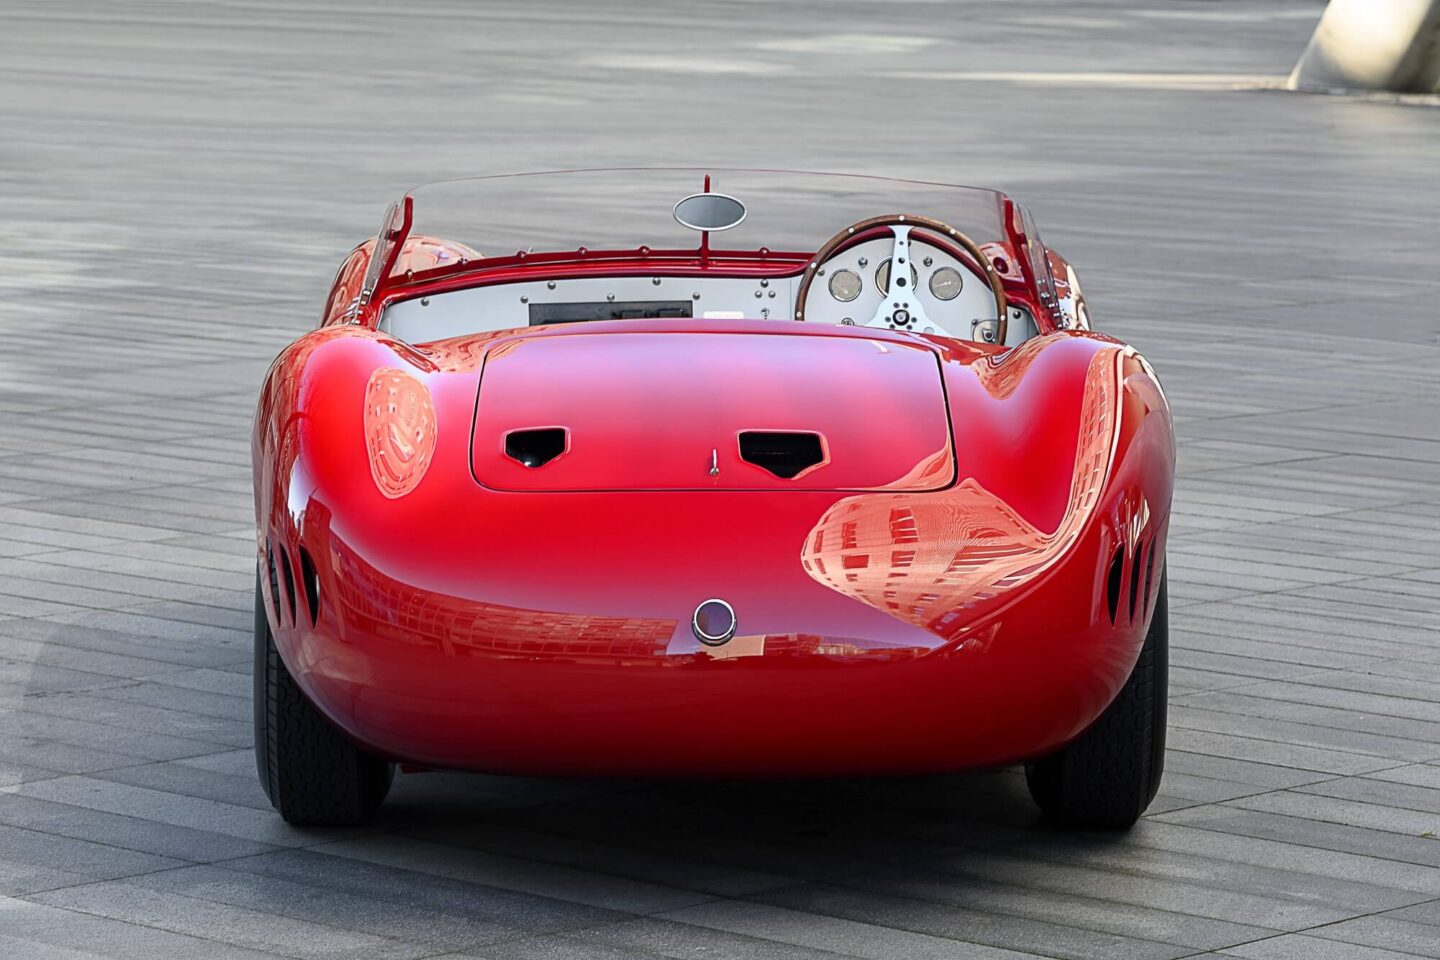 Maserati 300 Fangio